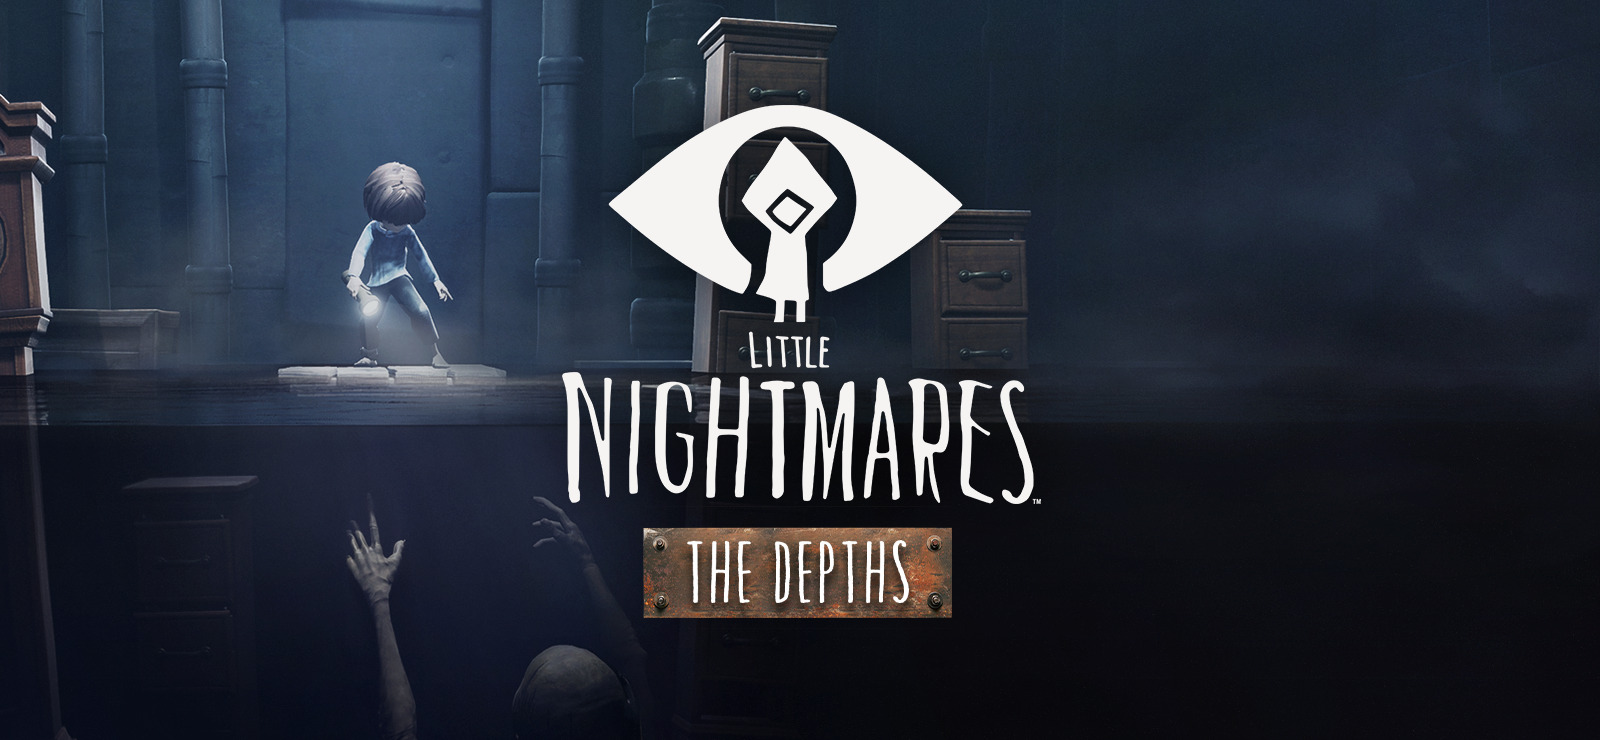 Little Nightmares - All Hands On Deck (Fictional DLC concept